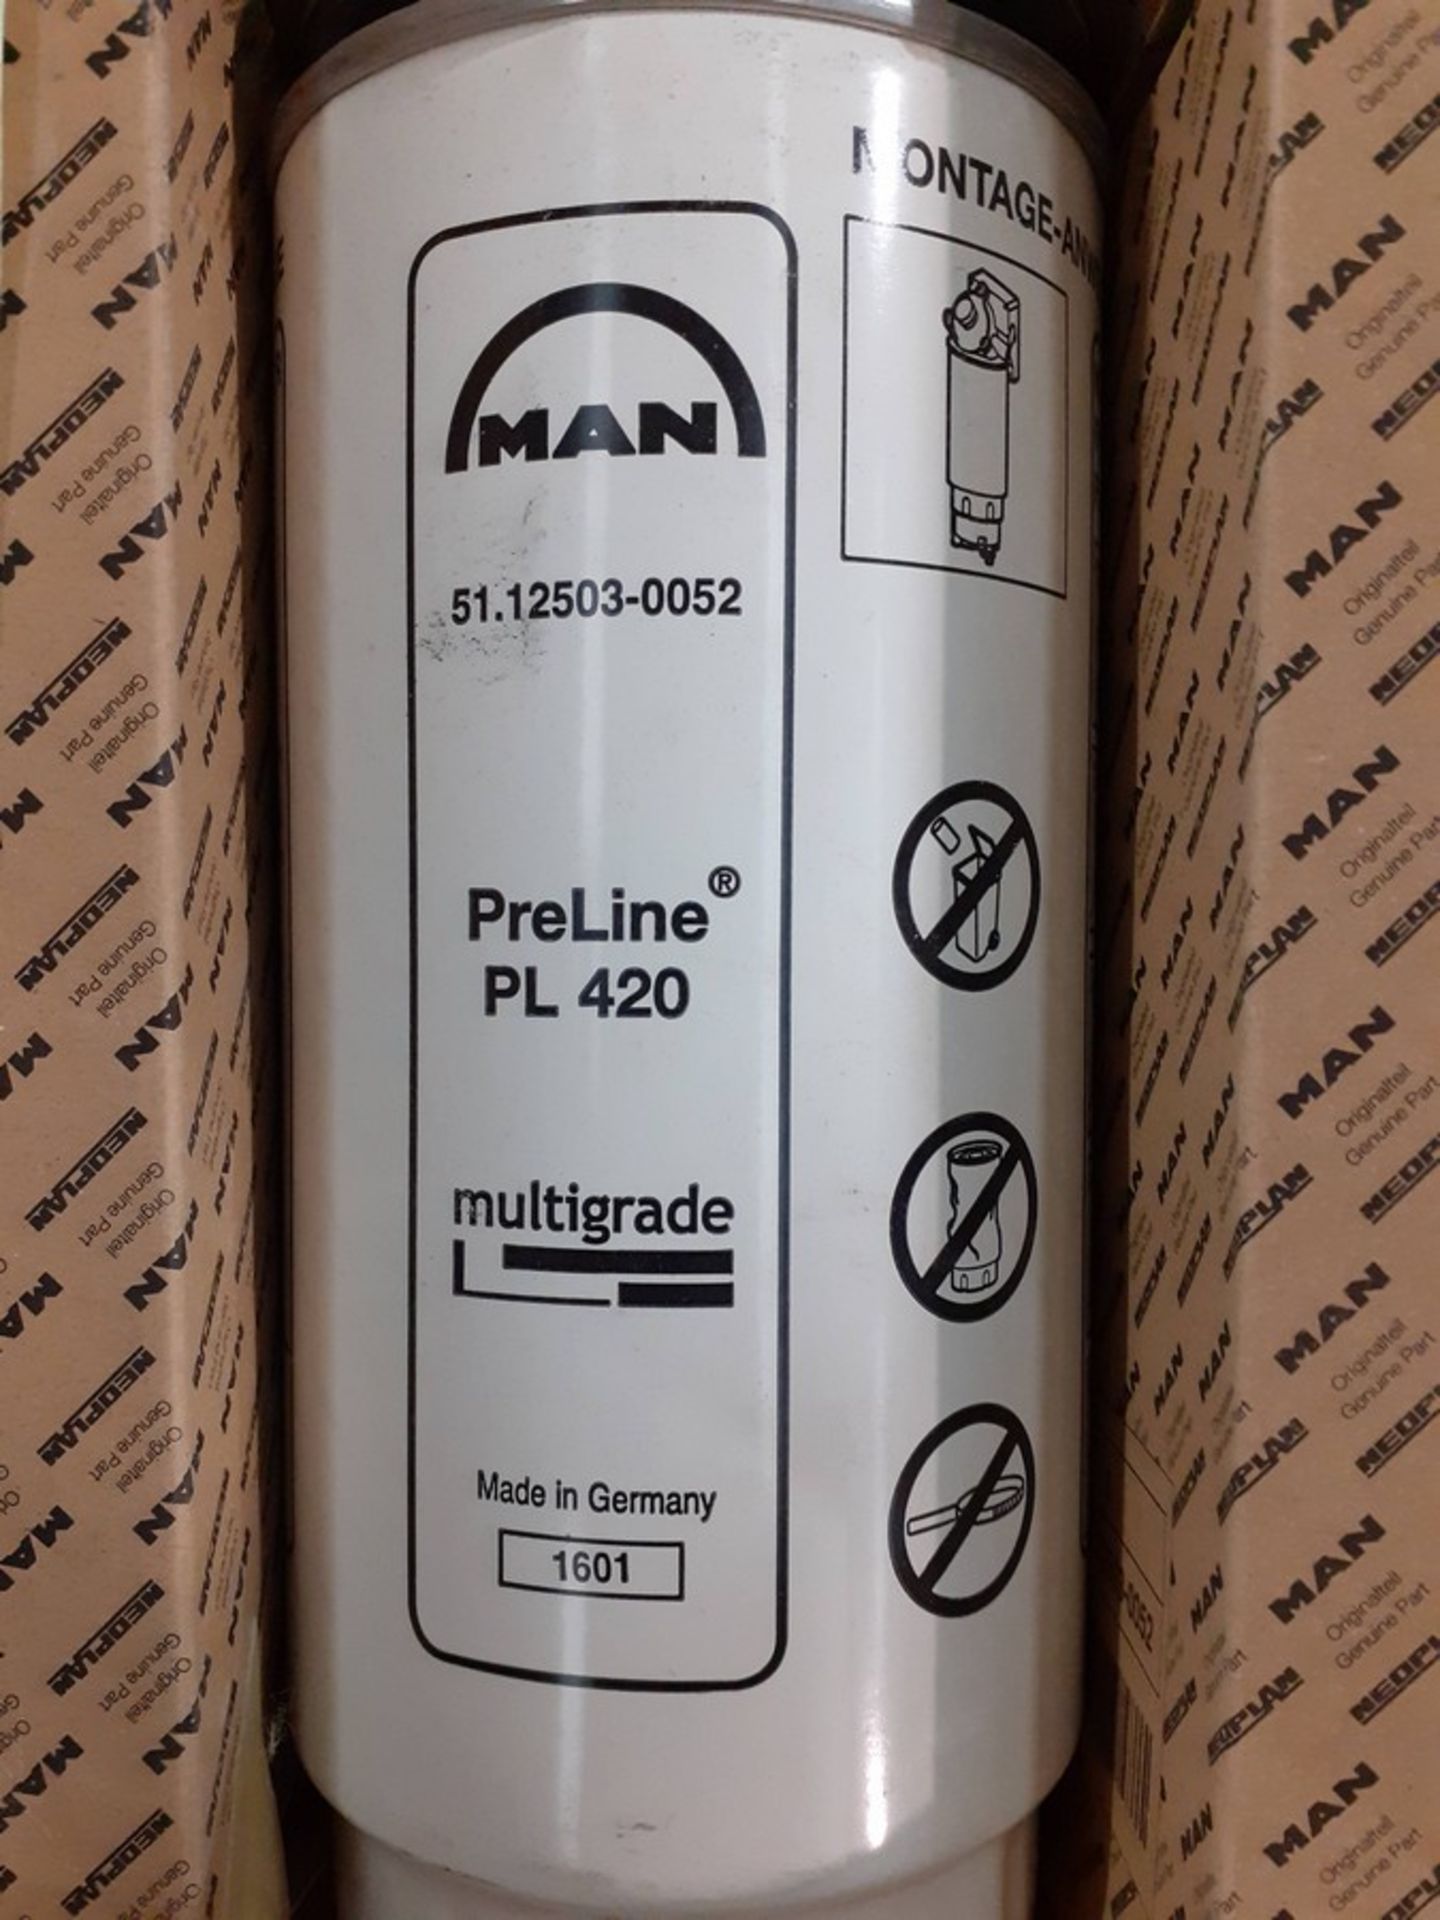 Mann fuel filter preline 4200 - 51.12503-0052 x 6 - Image 2 of 5